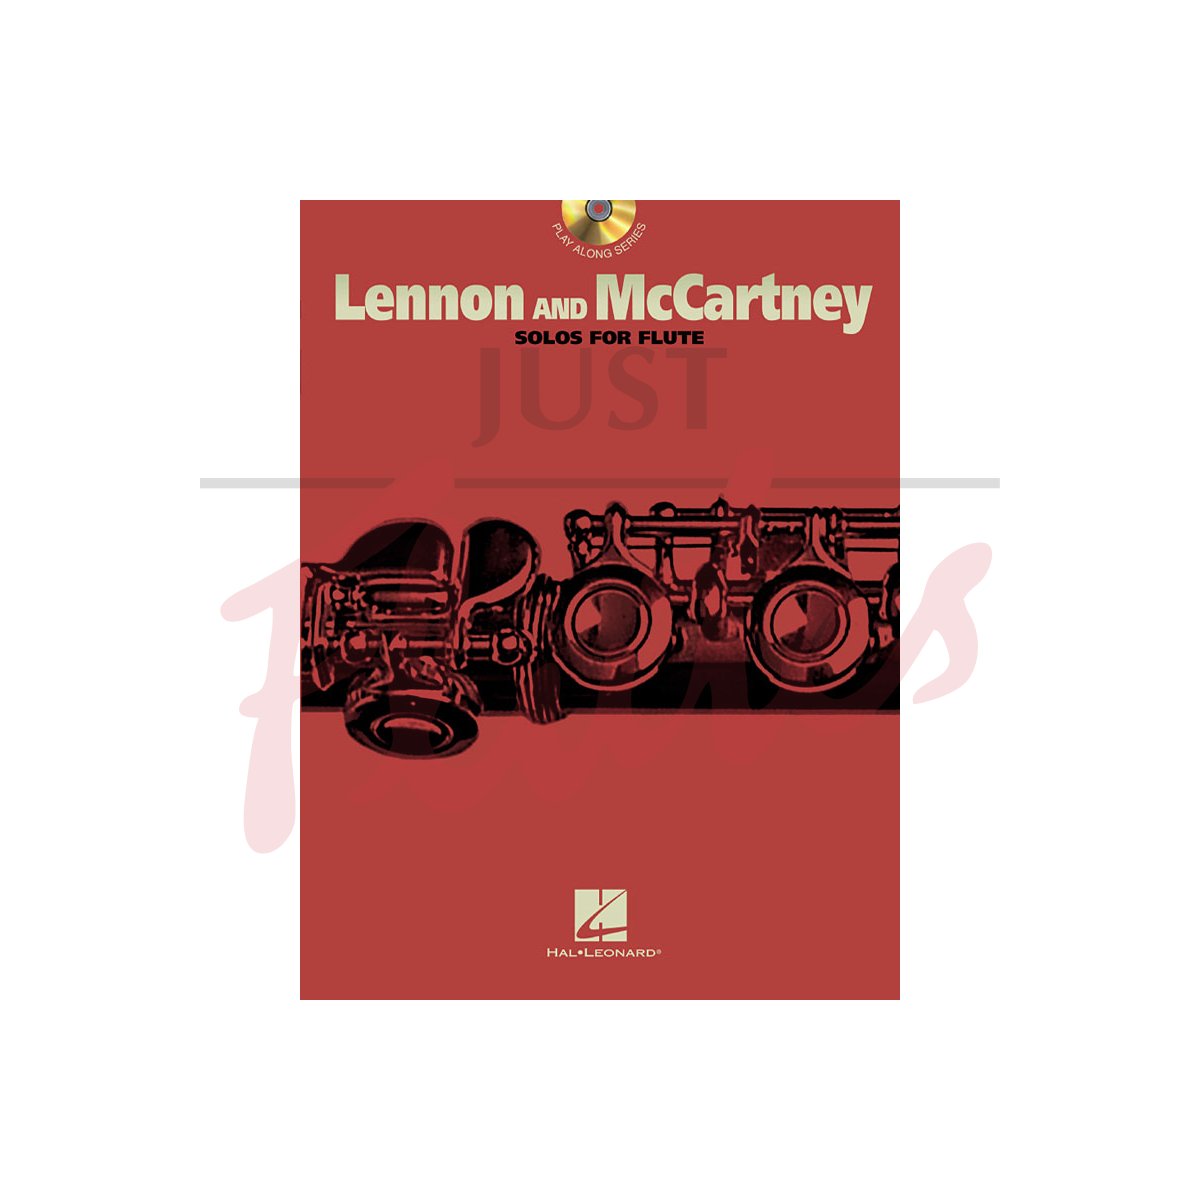 Lennon and McCartney Solos for Flute